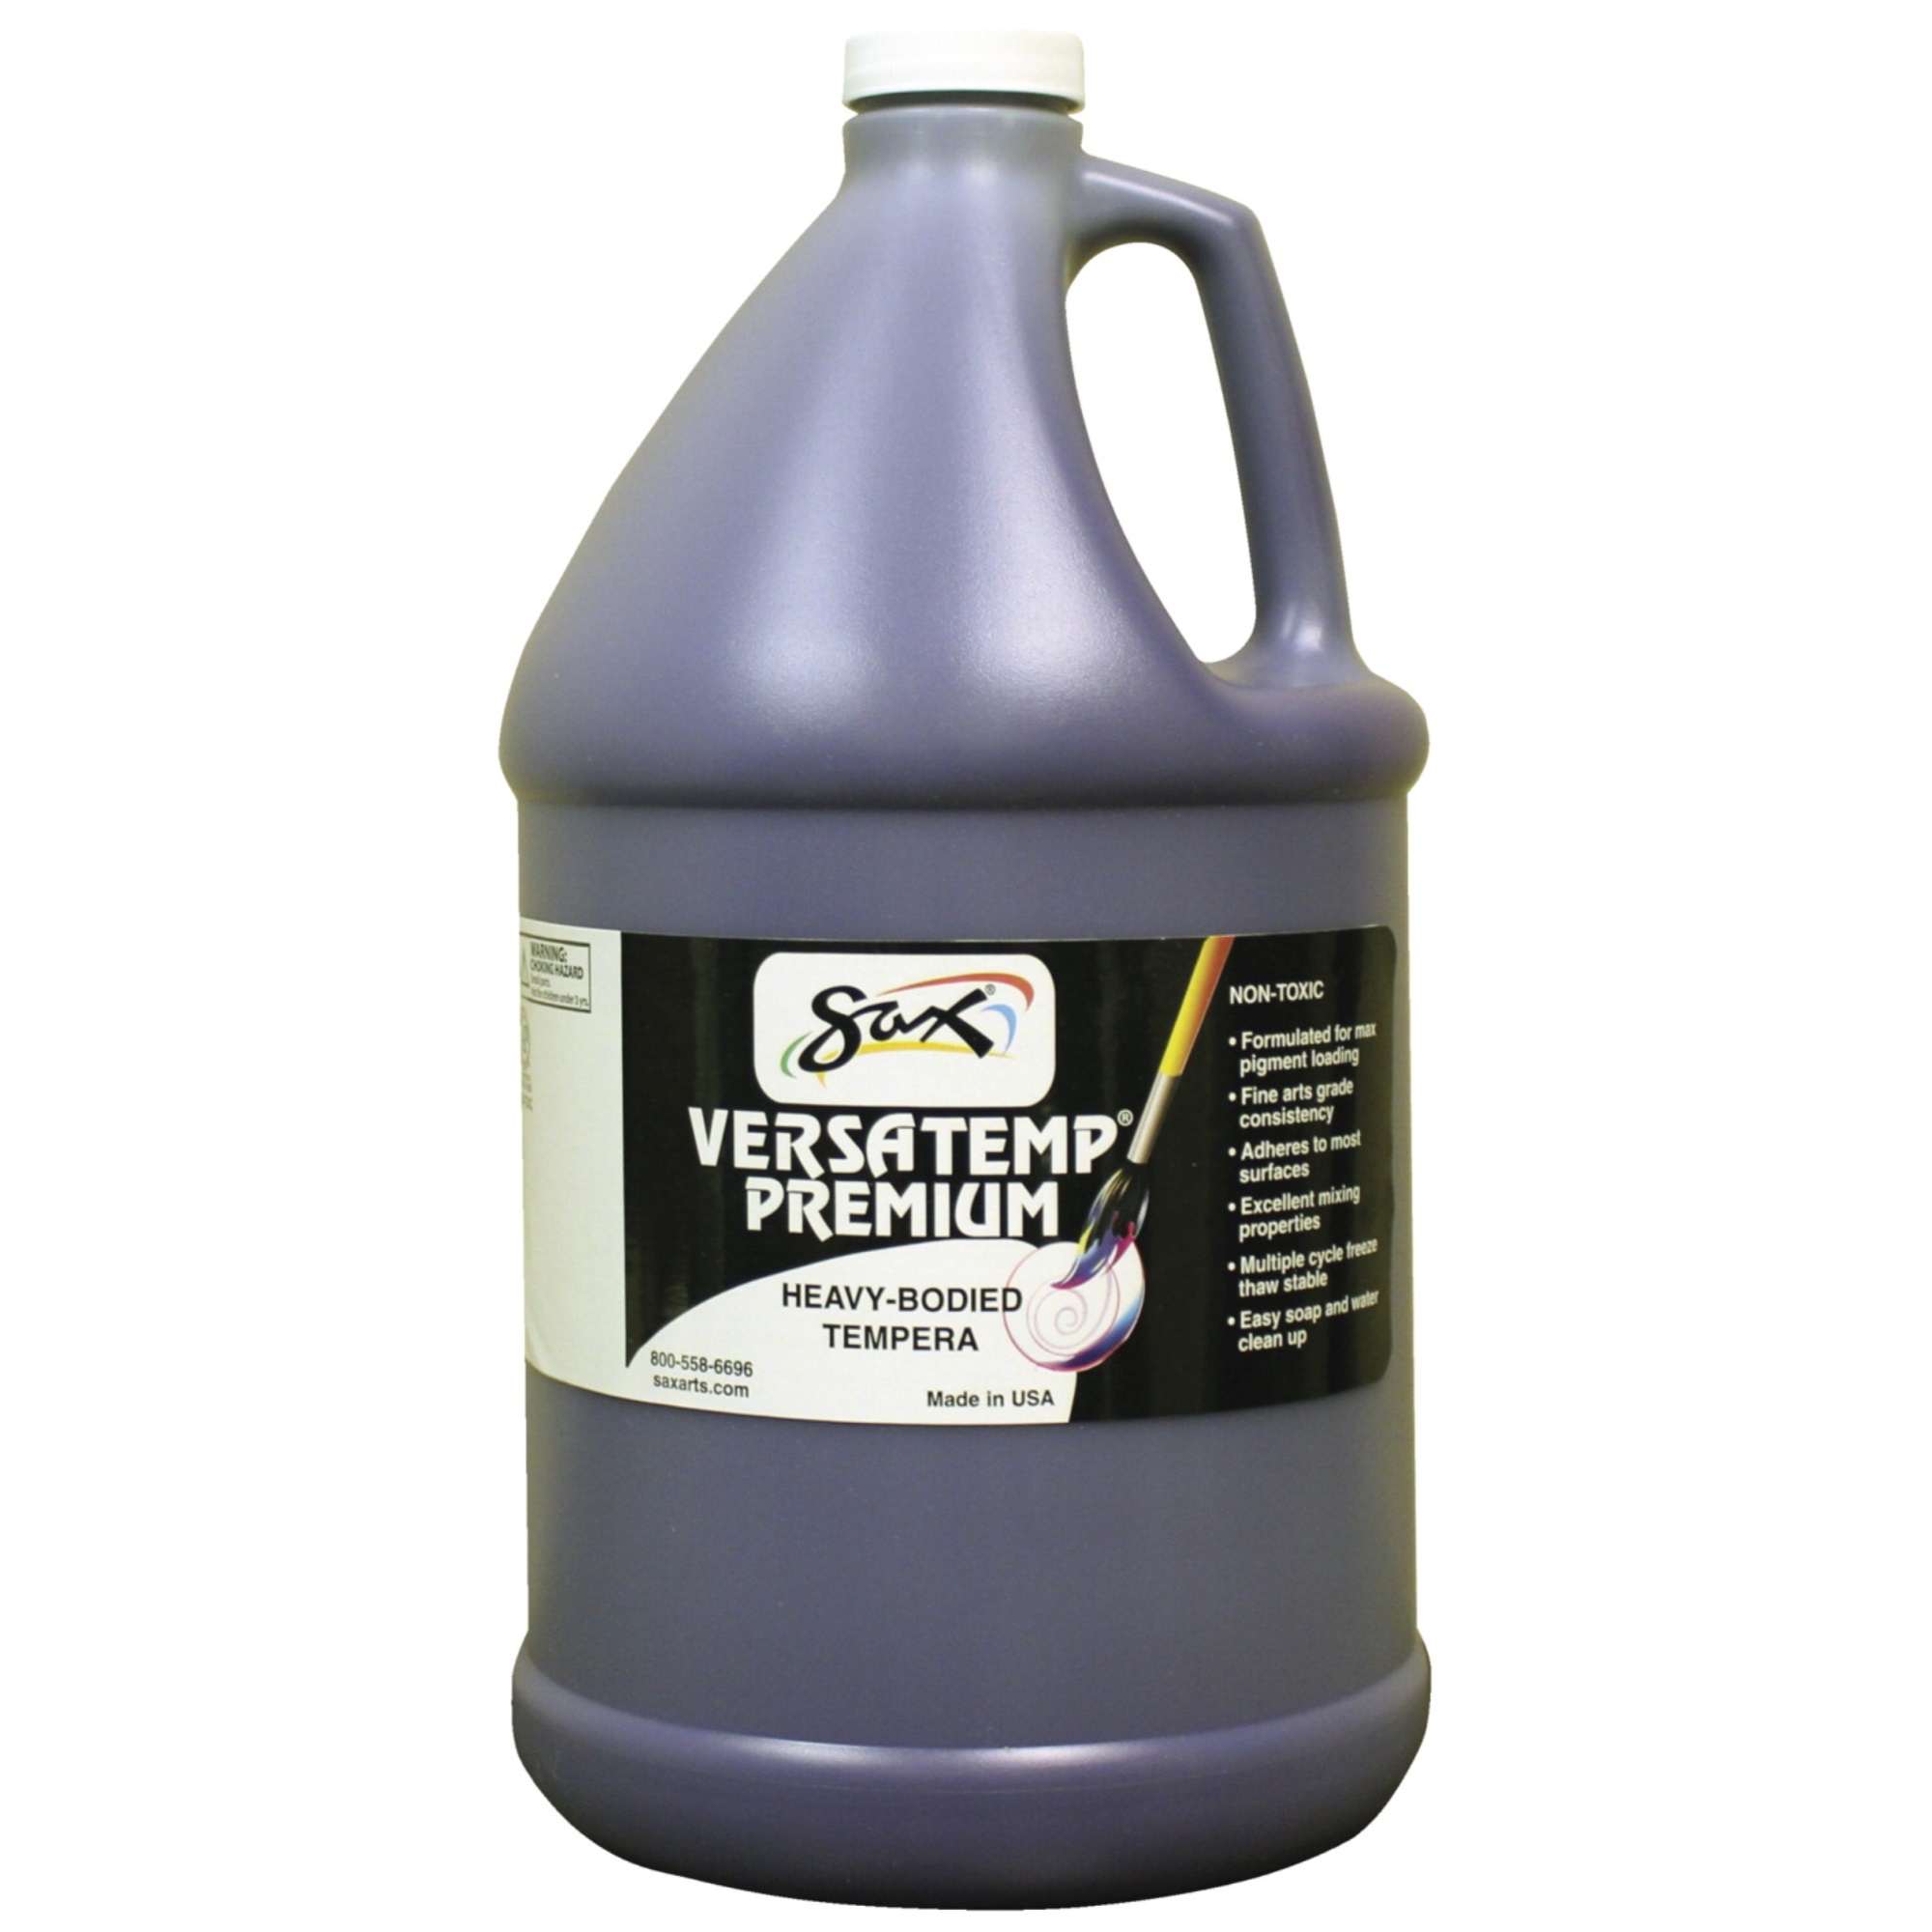 Sax Versatemp Premium Heavy-Bodied Tempera Paint, Violet, Gallon